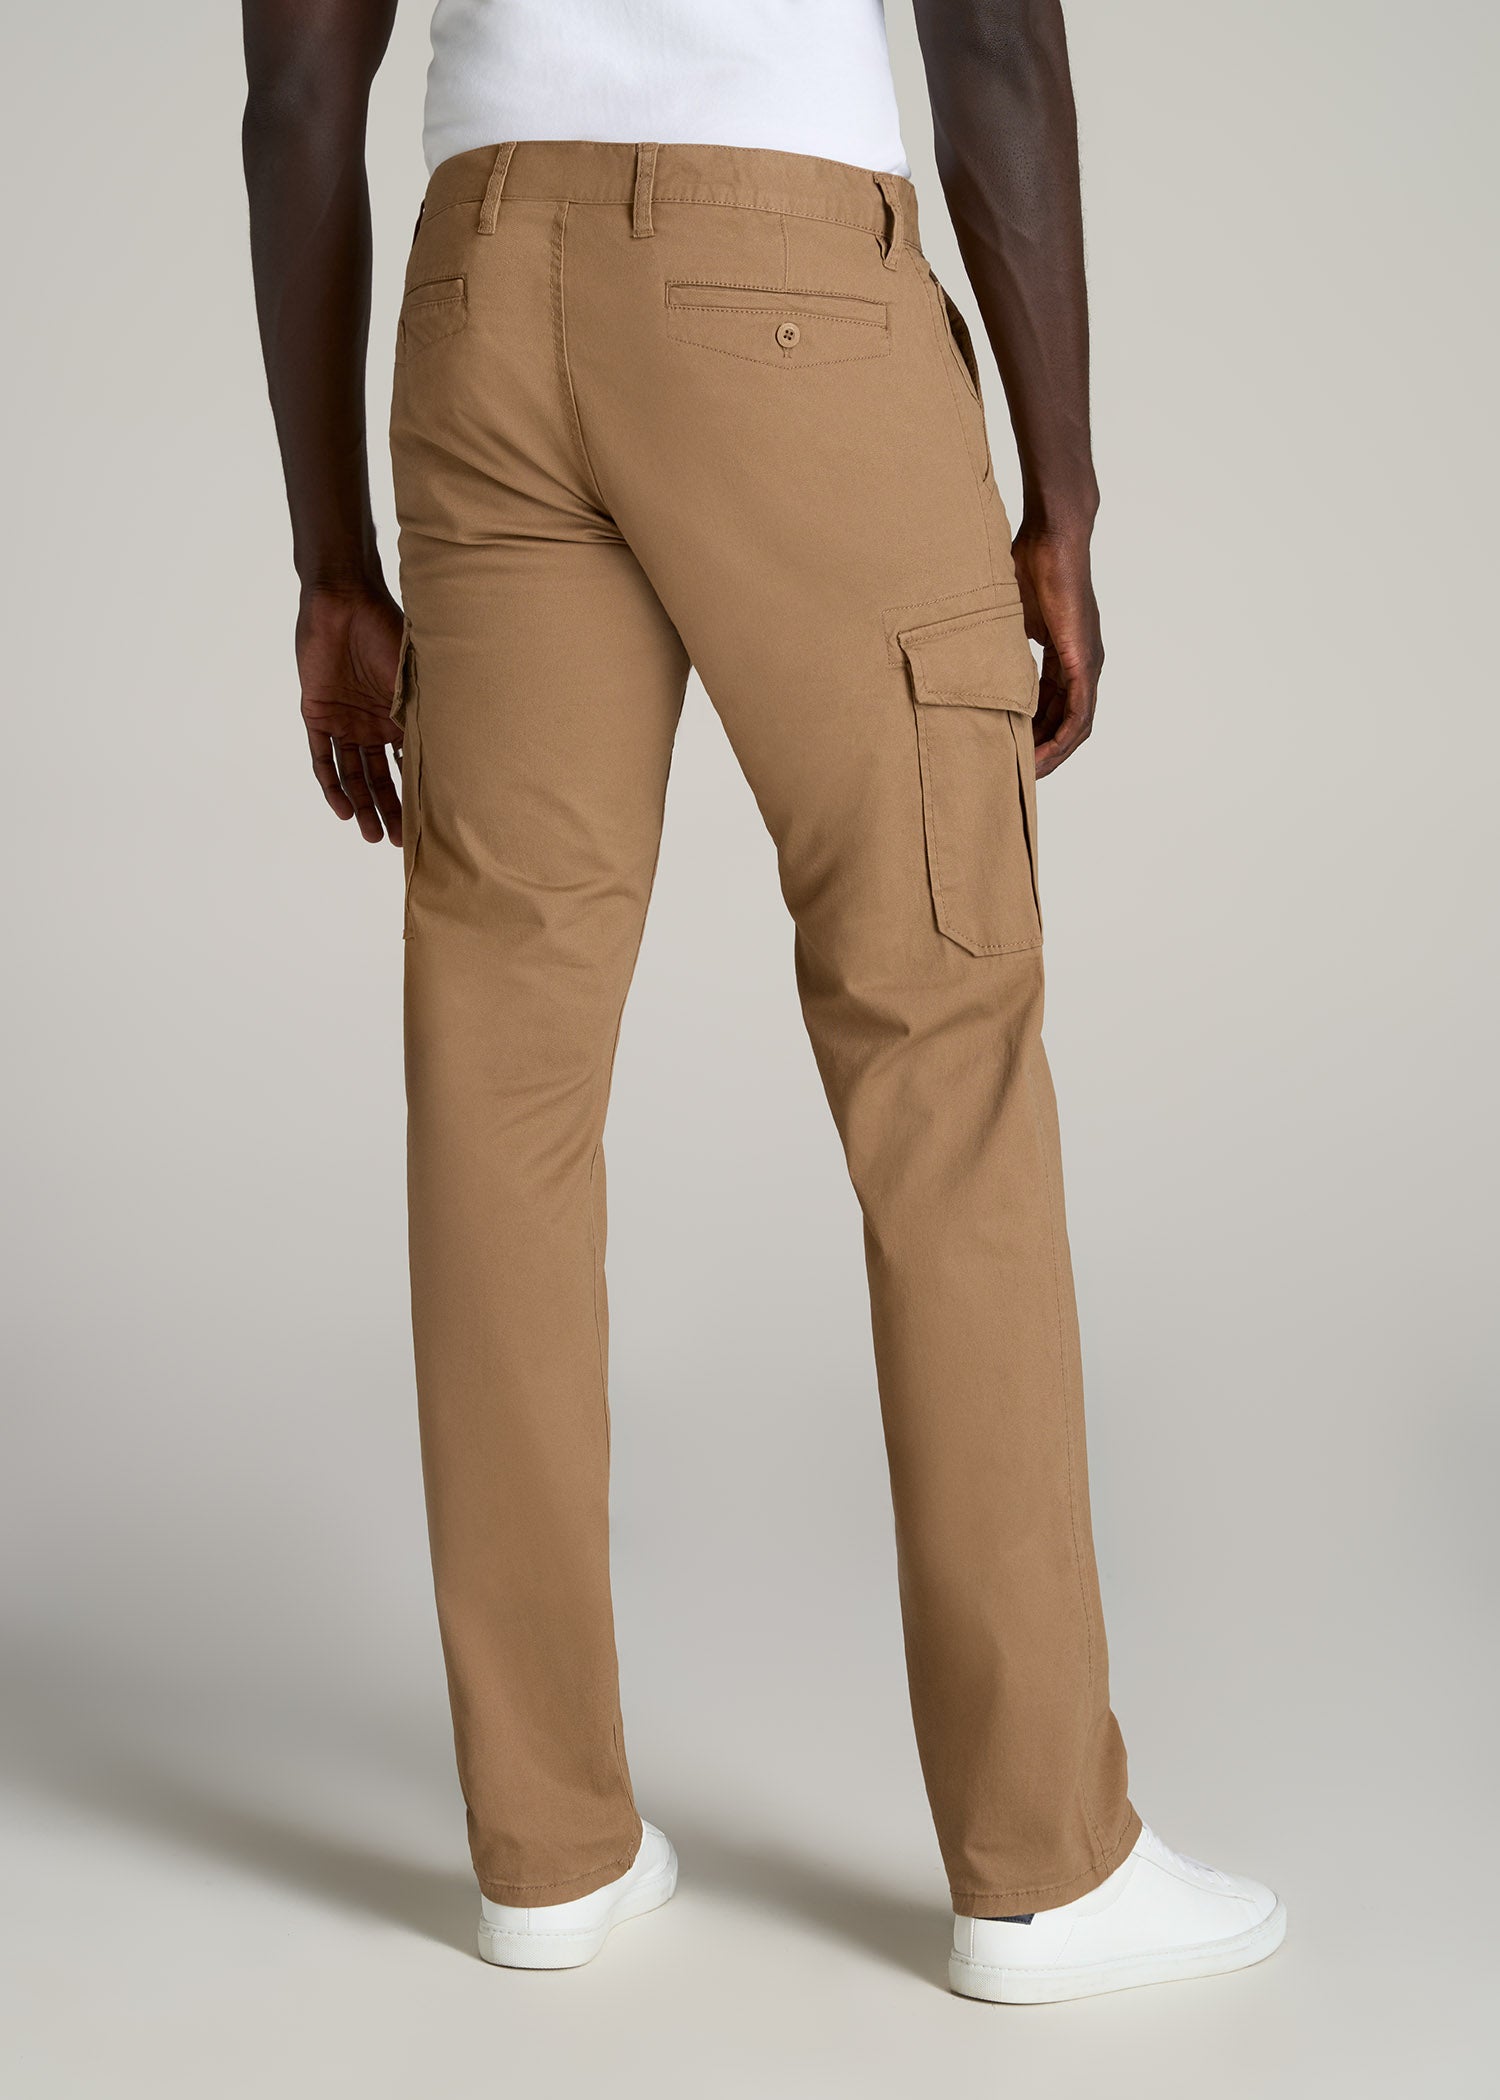 L Brown Wool Twill Trousers | Men's Dress Pants - Men's Trousers | Mens  dress pants, Mens trousers, Fun pants